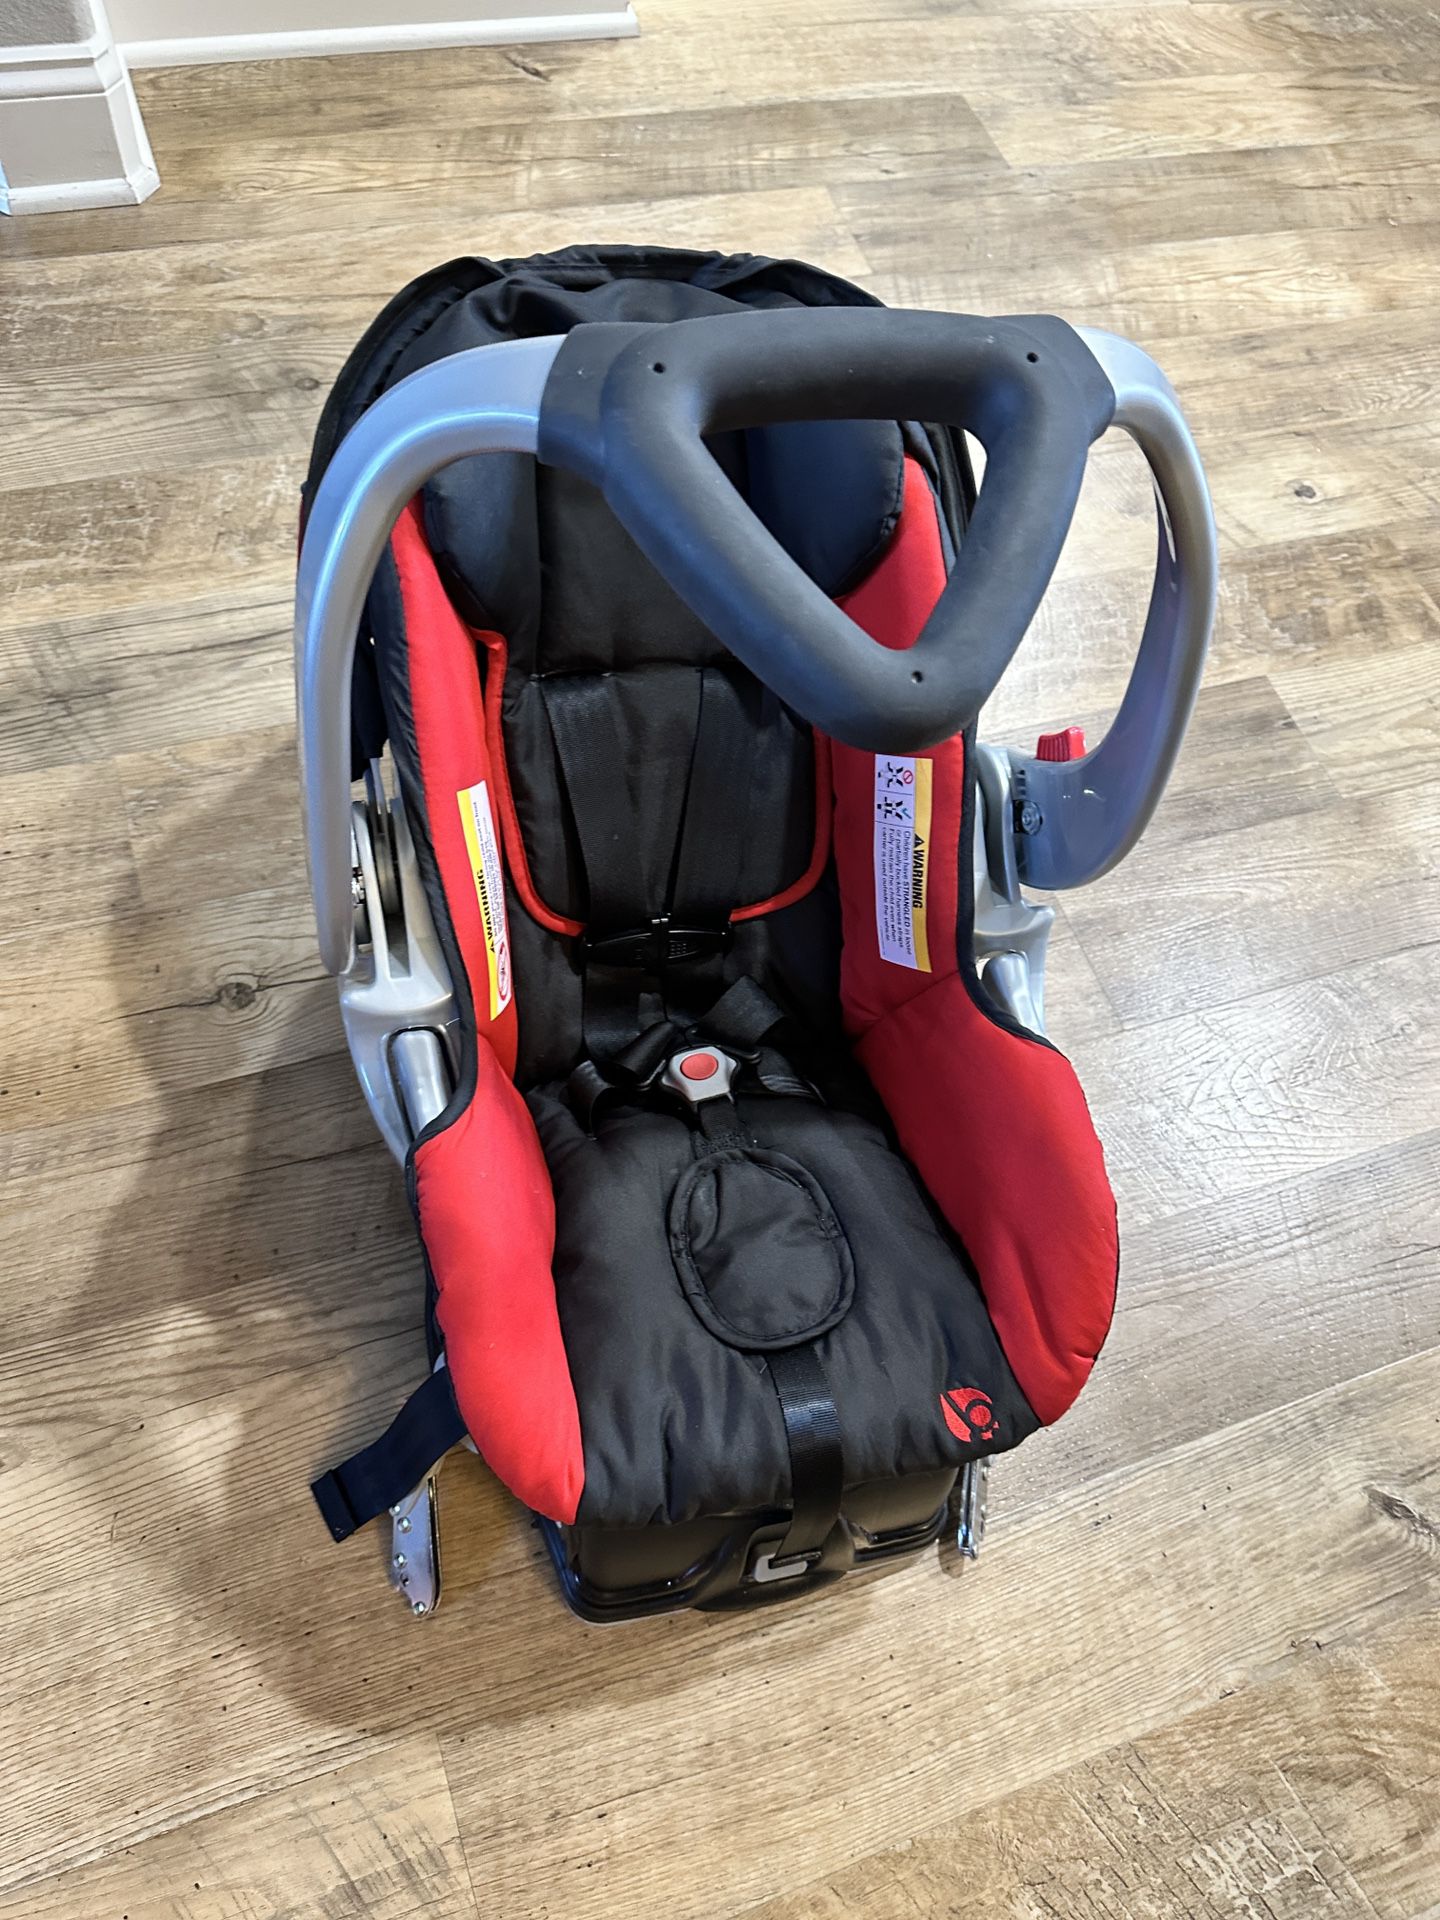 Baby Trend EZ Lift 35 Plus Infant Car Seat With Base